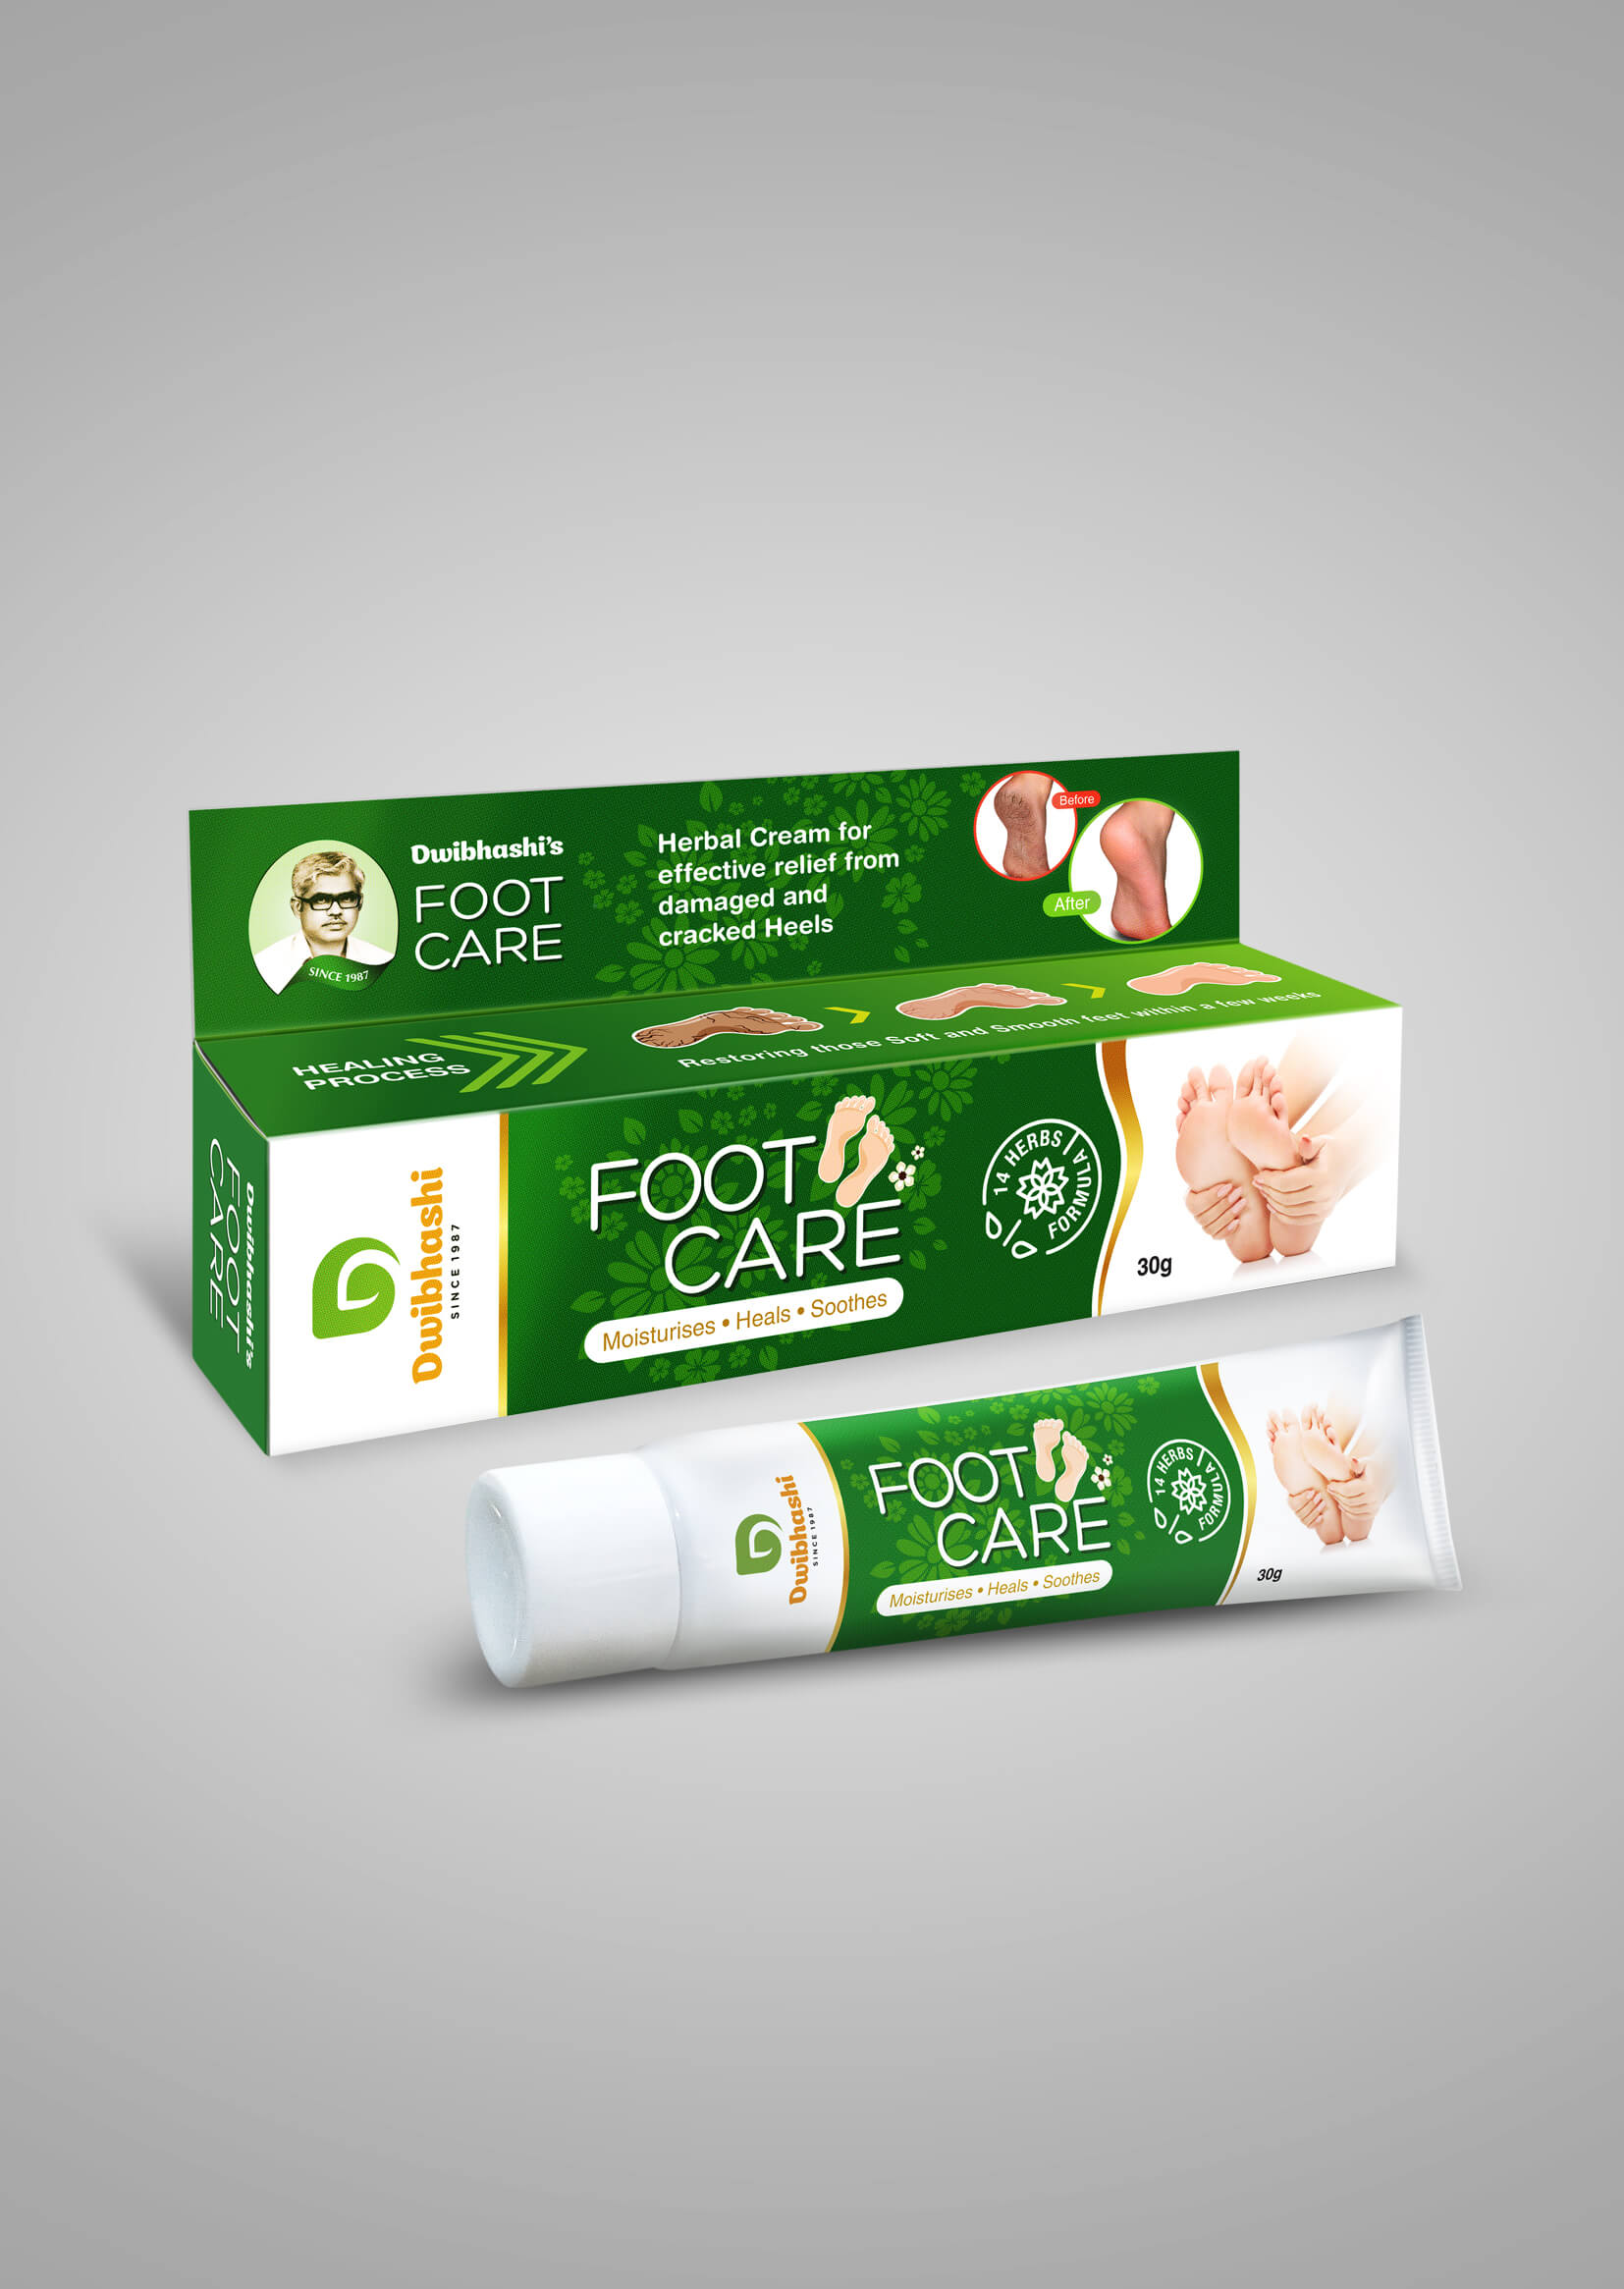 Buy Foot care Cream  Online